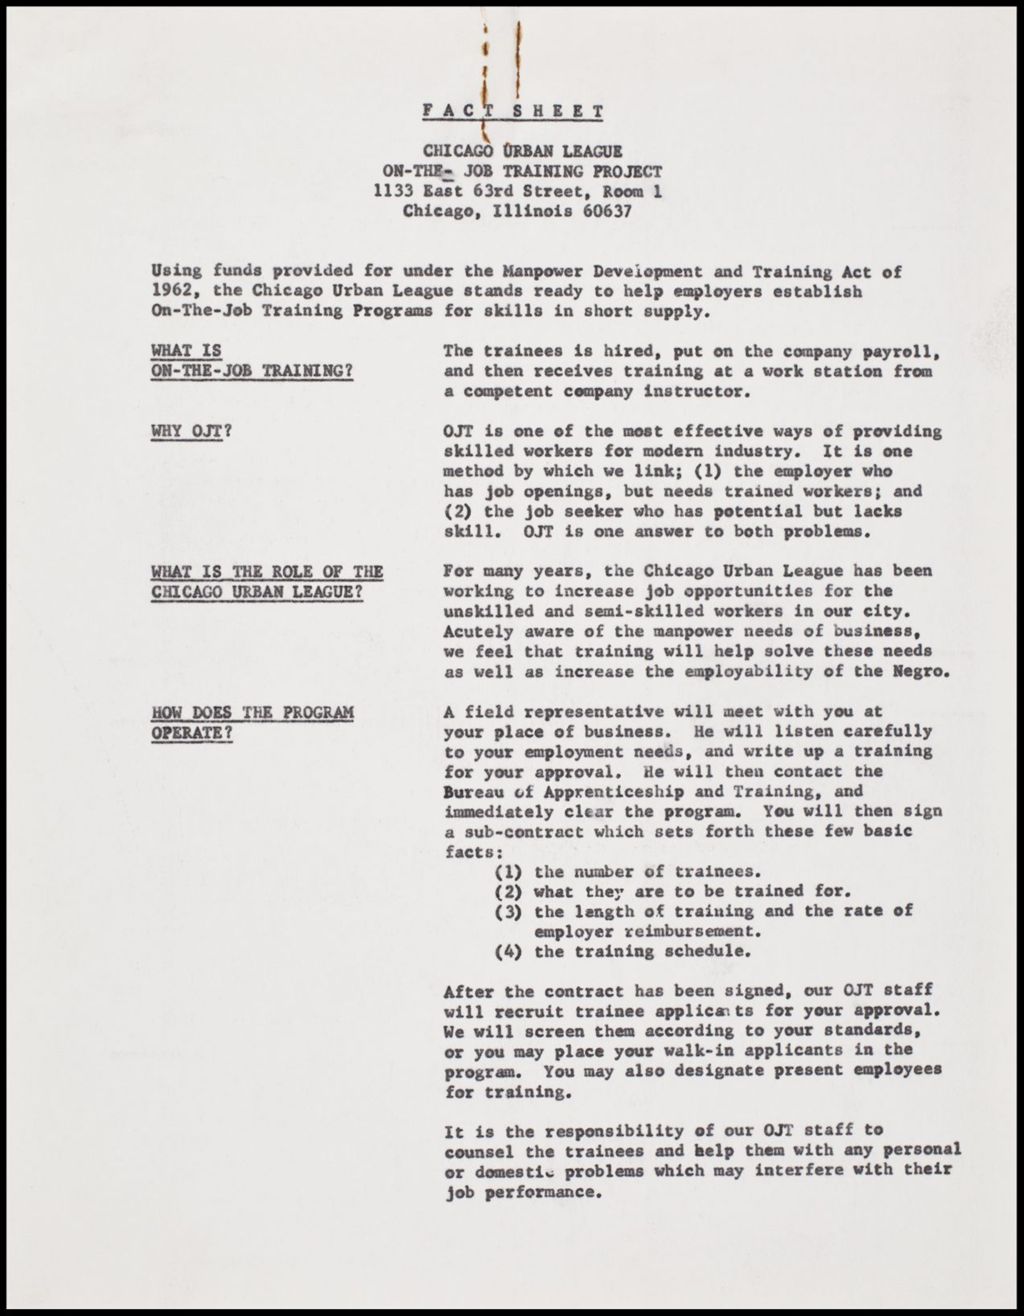 Miniature of Fact Sheet, undated (Folder II-18)